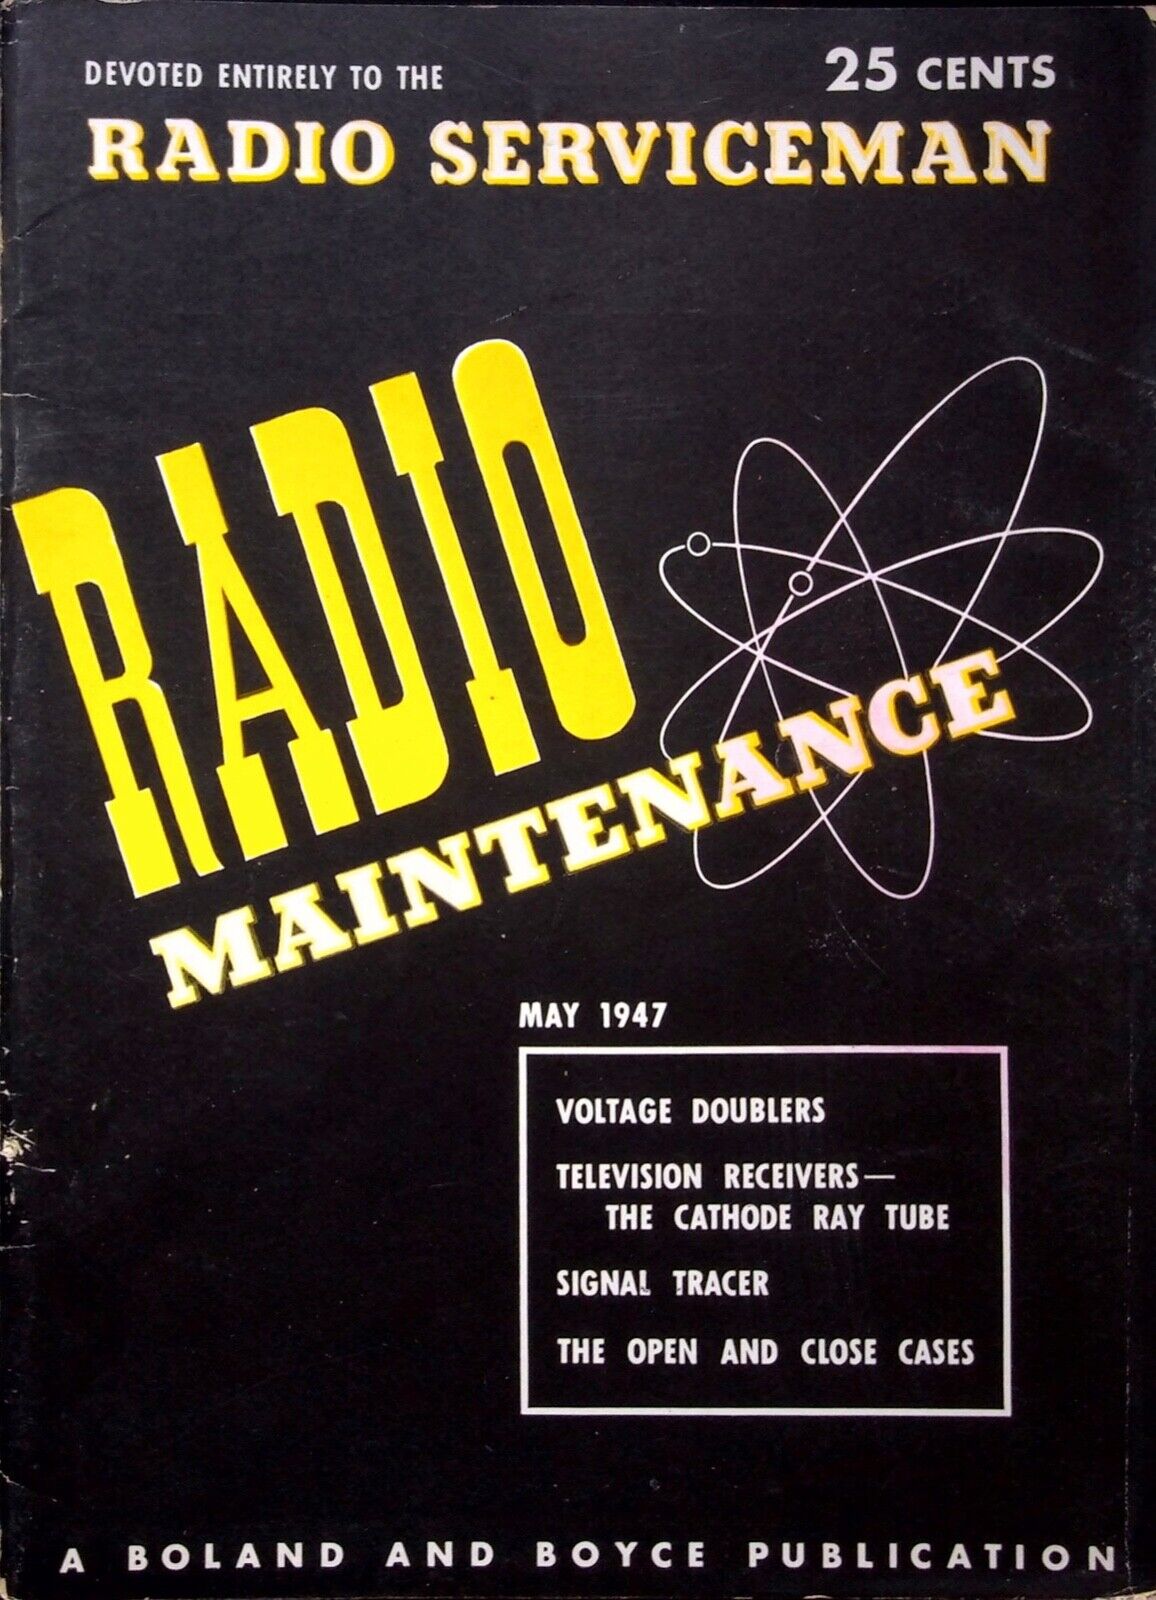 VOLTAGE DOUBLERS - RADIO MAINTENANCE MAGAZINE, BOLAND & BOYCE INC. MAY 1947